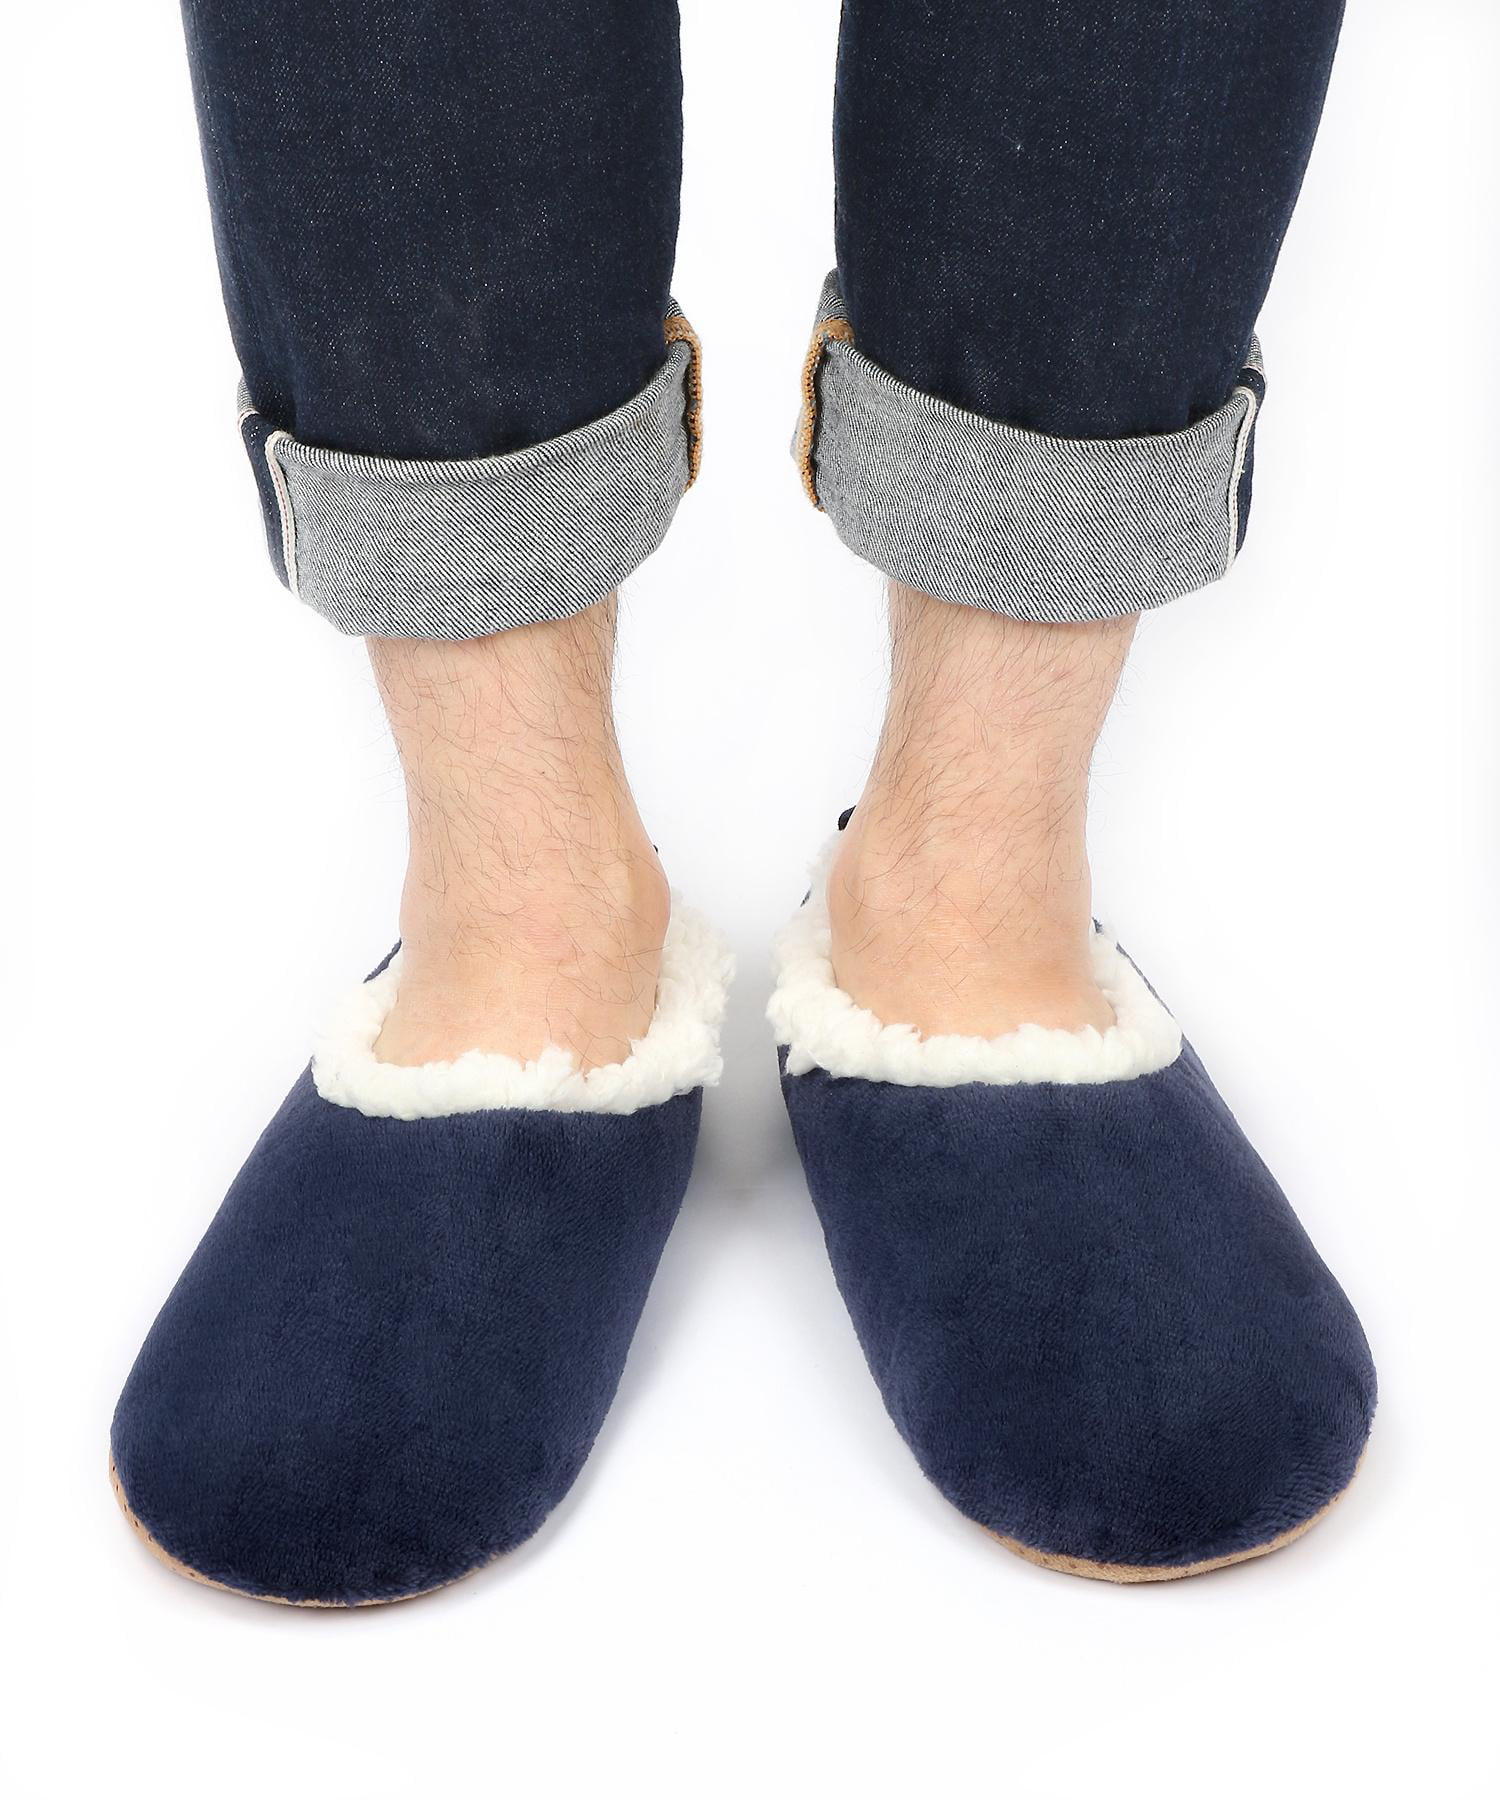 Fuzzy House Slippers Warm Slipper Socks With Grippers For Men Panda Bros Mens Slipper Socks With Non Skid Bottoms 